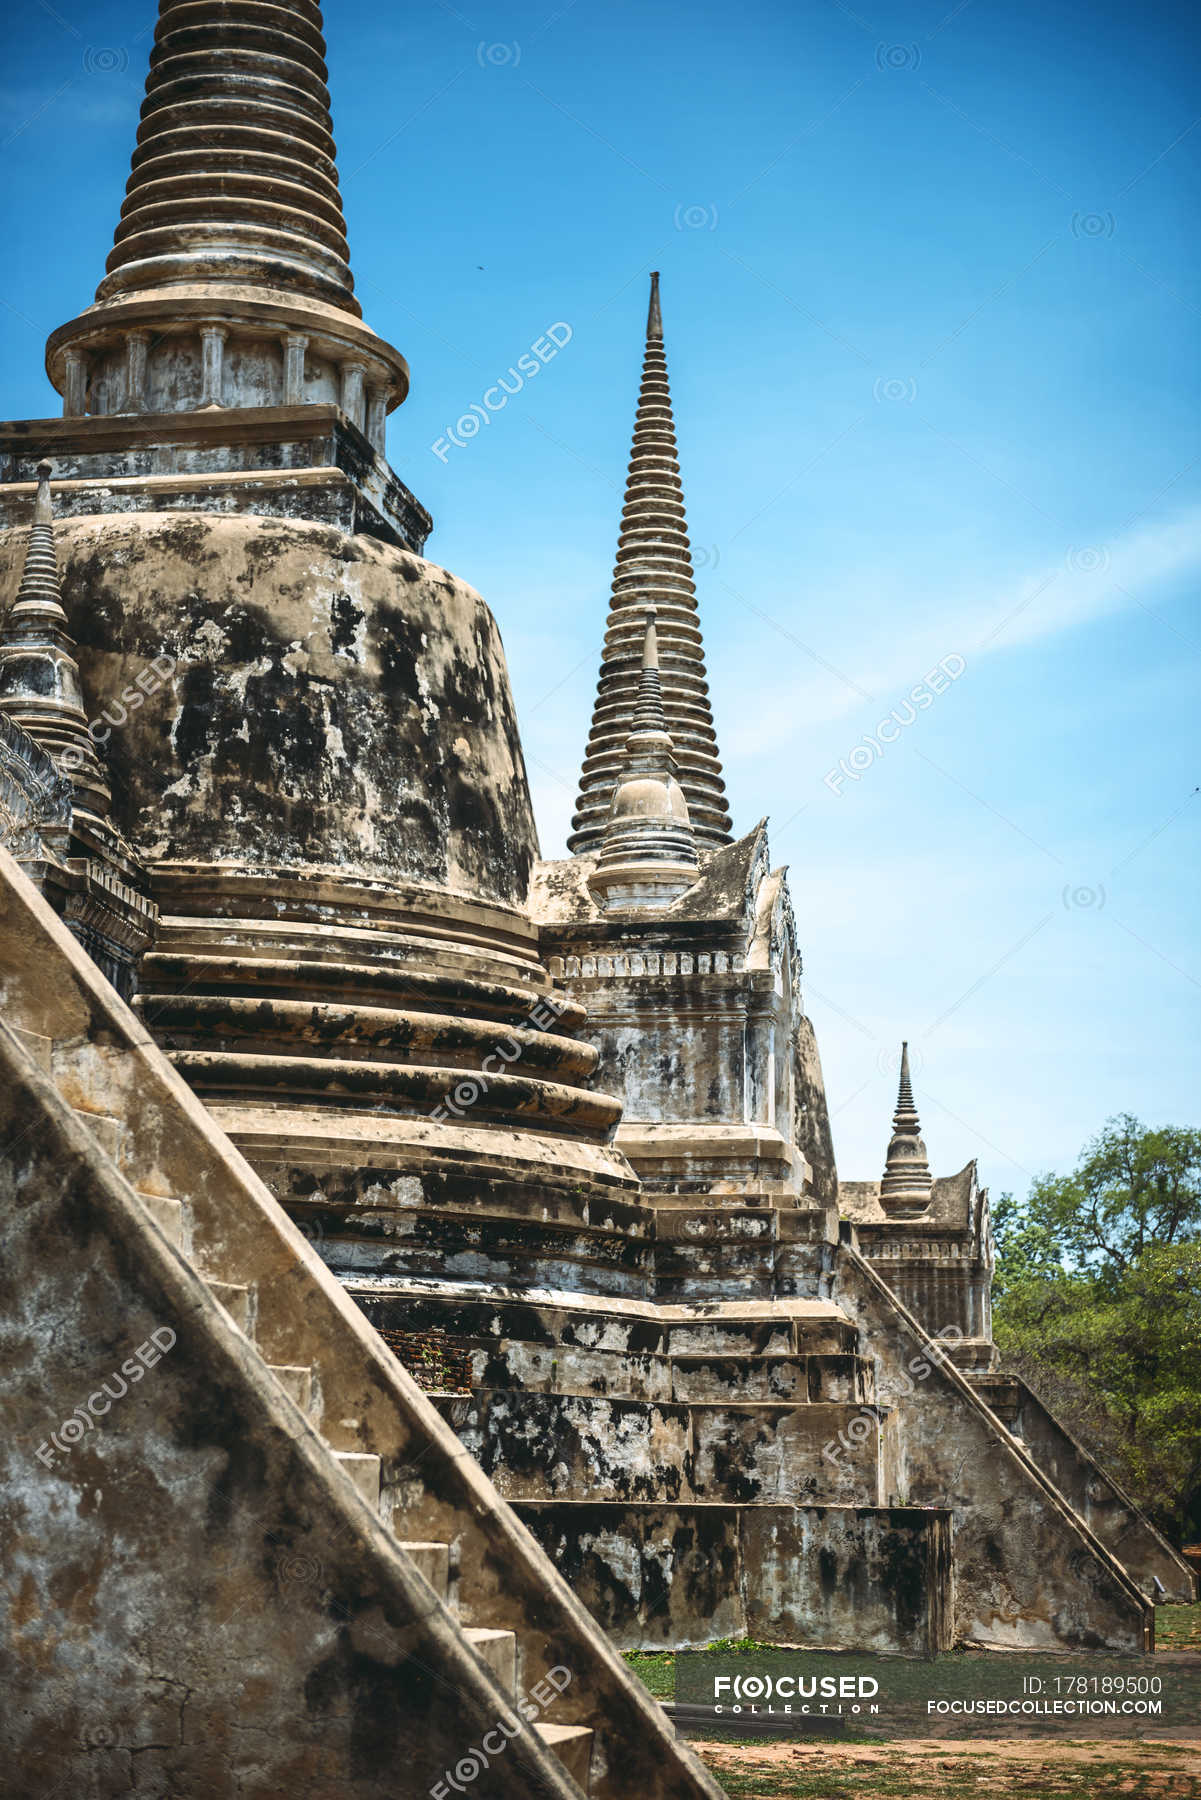 Phra Nakhon Si Ayutthaya, Wat Si Sanphet — Built Structure, phra nakhon district - Stock Photo #178189500